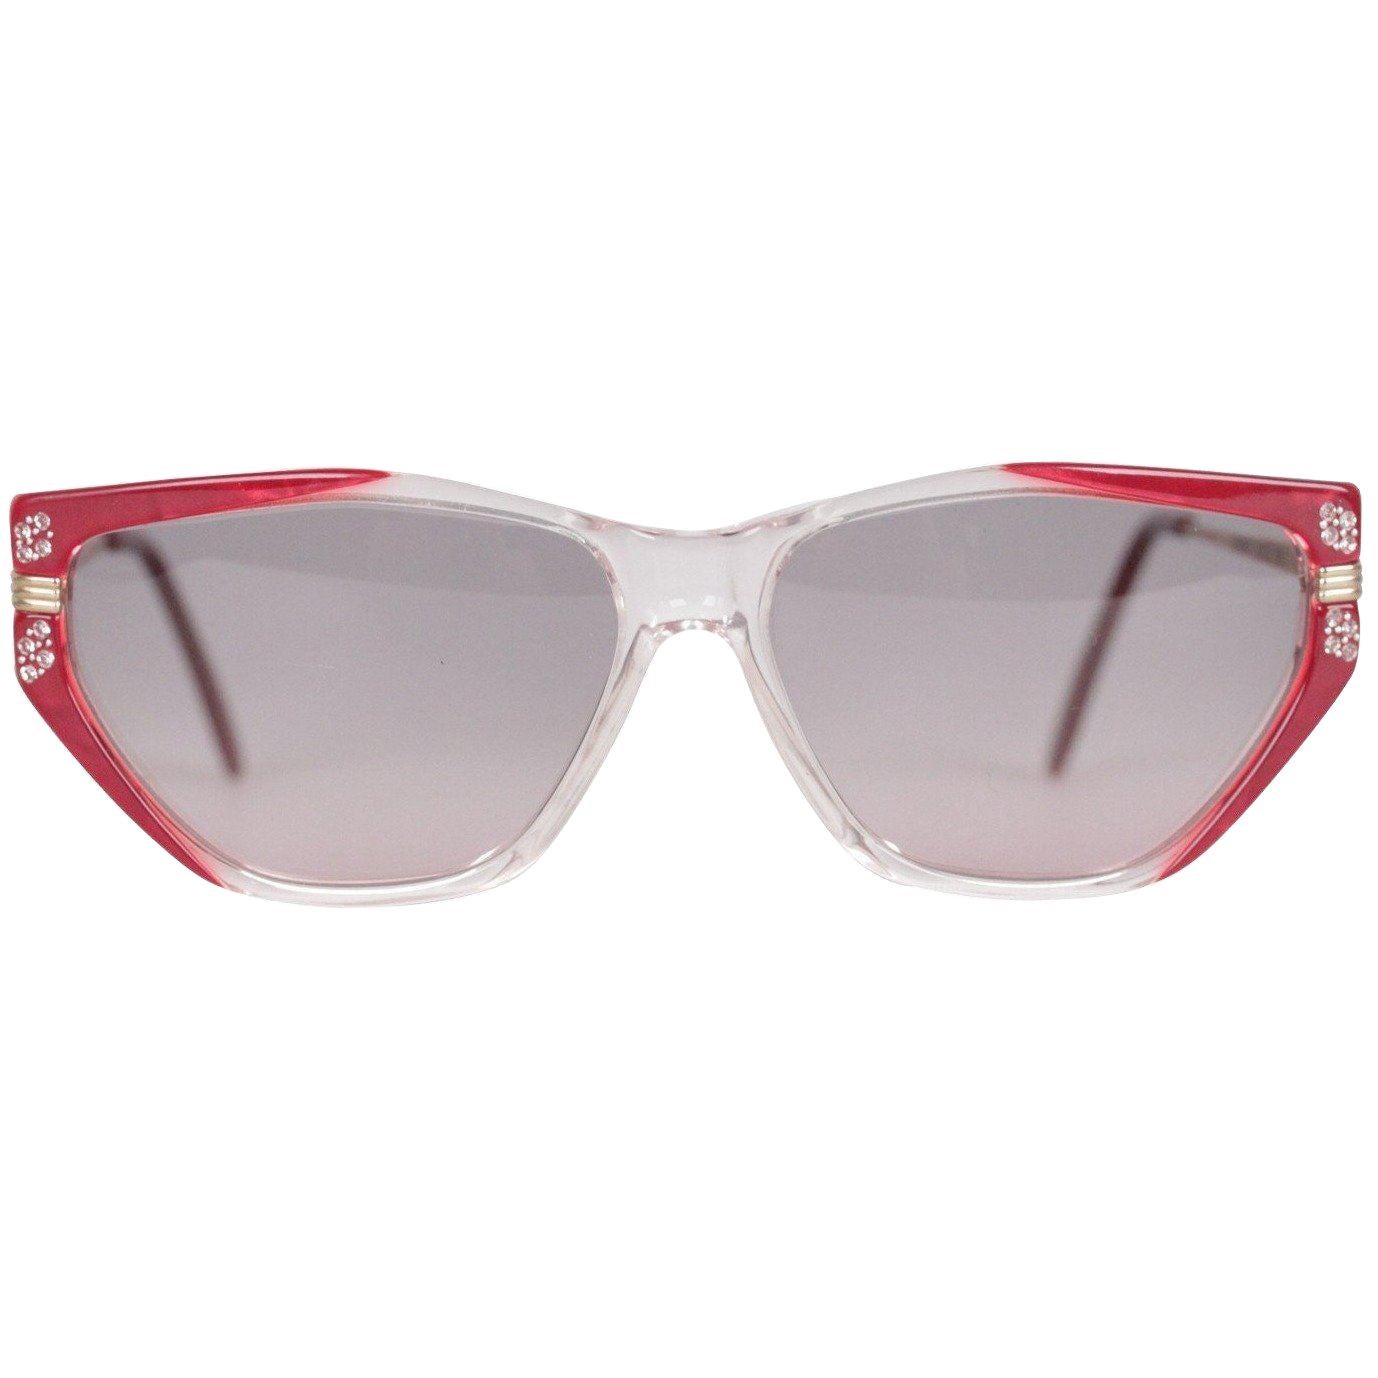 Yves Saint Laurent Vintage Red Sunglasses Euterpe 60mm